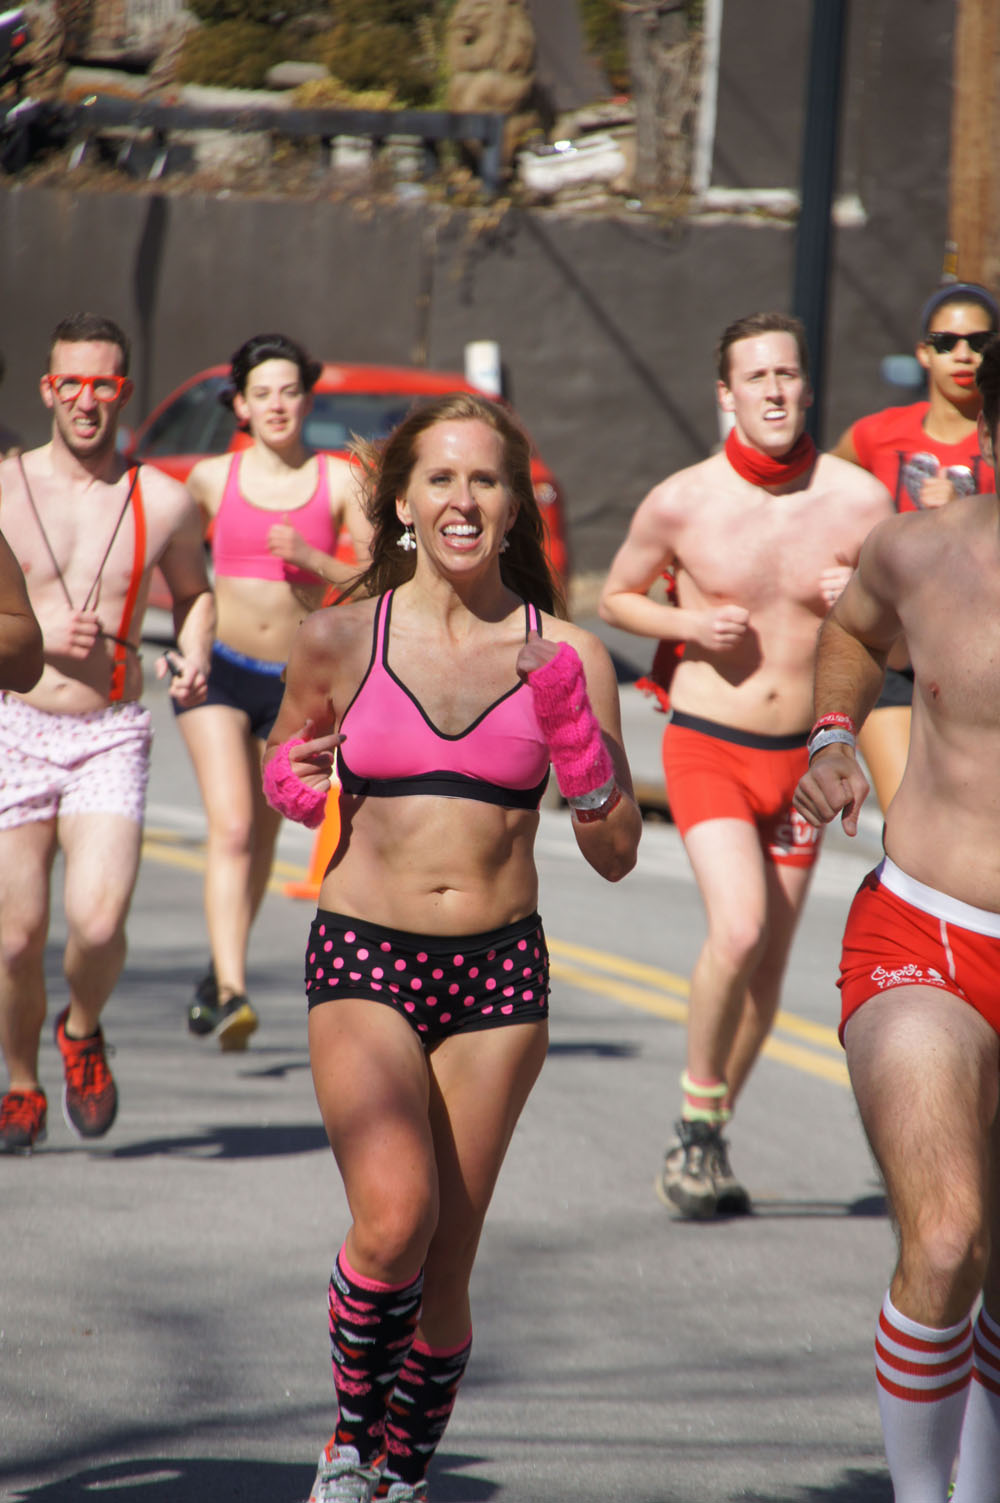 File:People running in pink and red underwear during Cupid's Undie Run.jpg ( 2).jpg - Wikimedia Commons